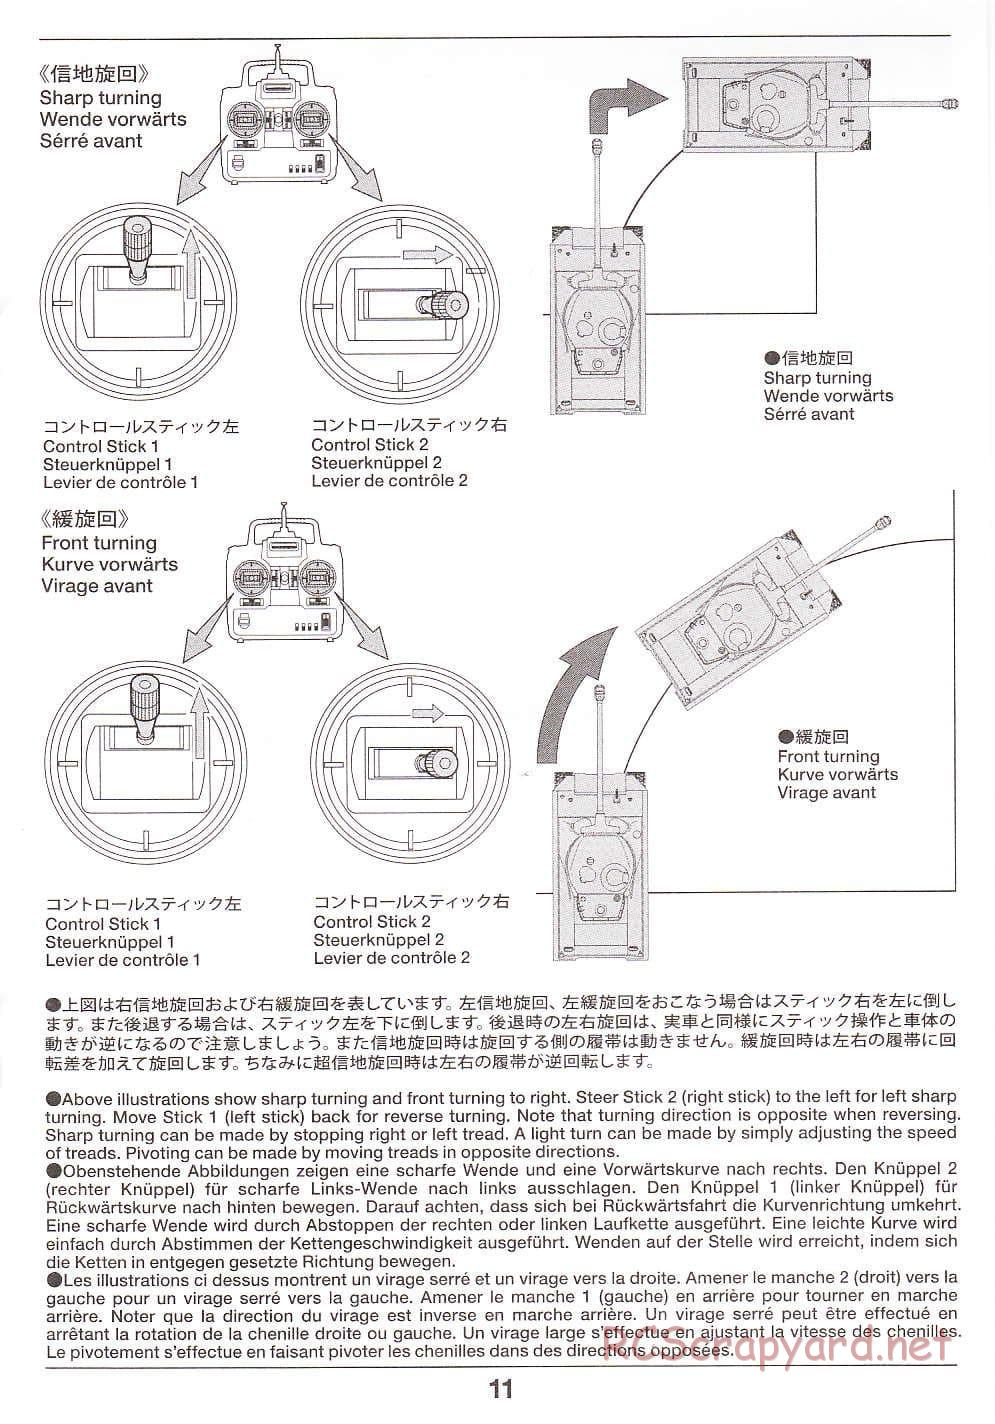 Tamiya - Super Sherman M-51 - 1/16 Scale Chassis - Operation Manual - Page 11